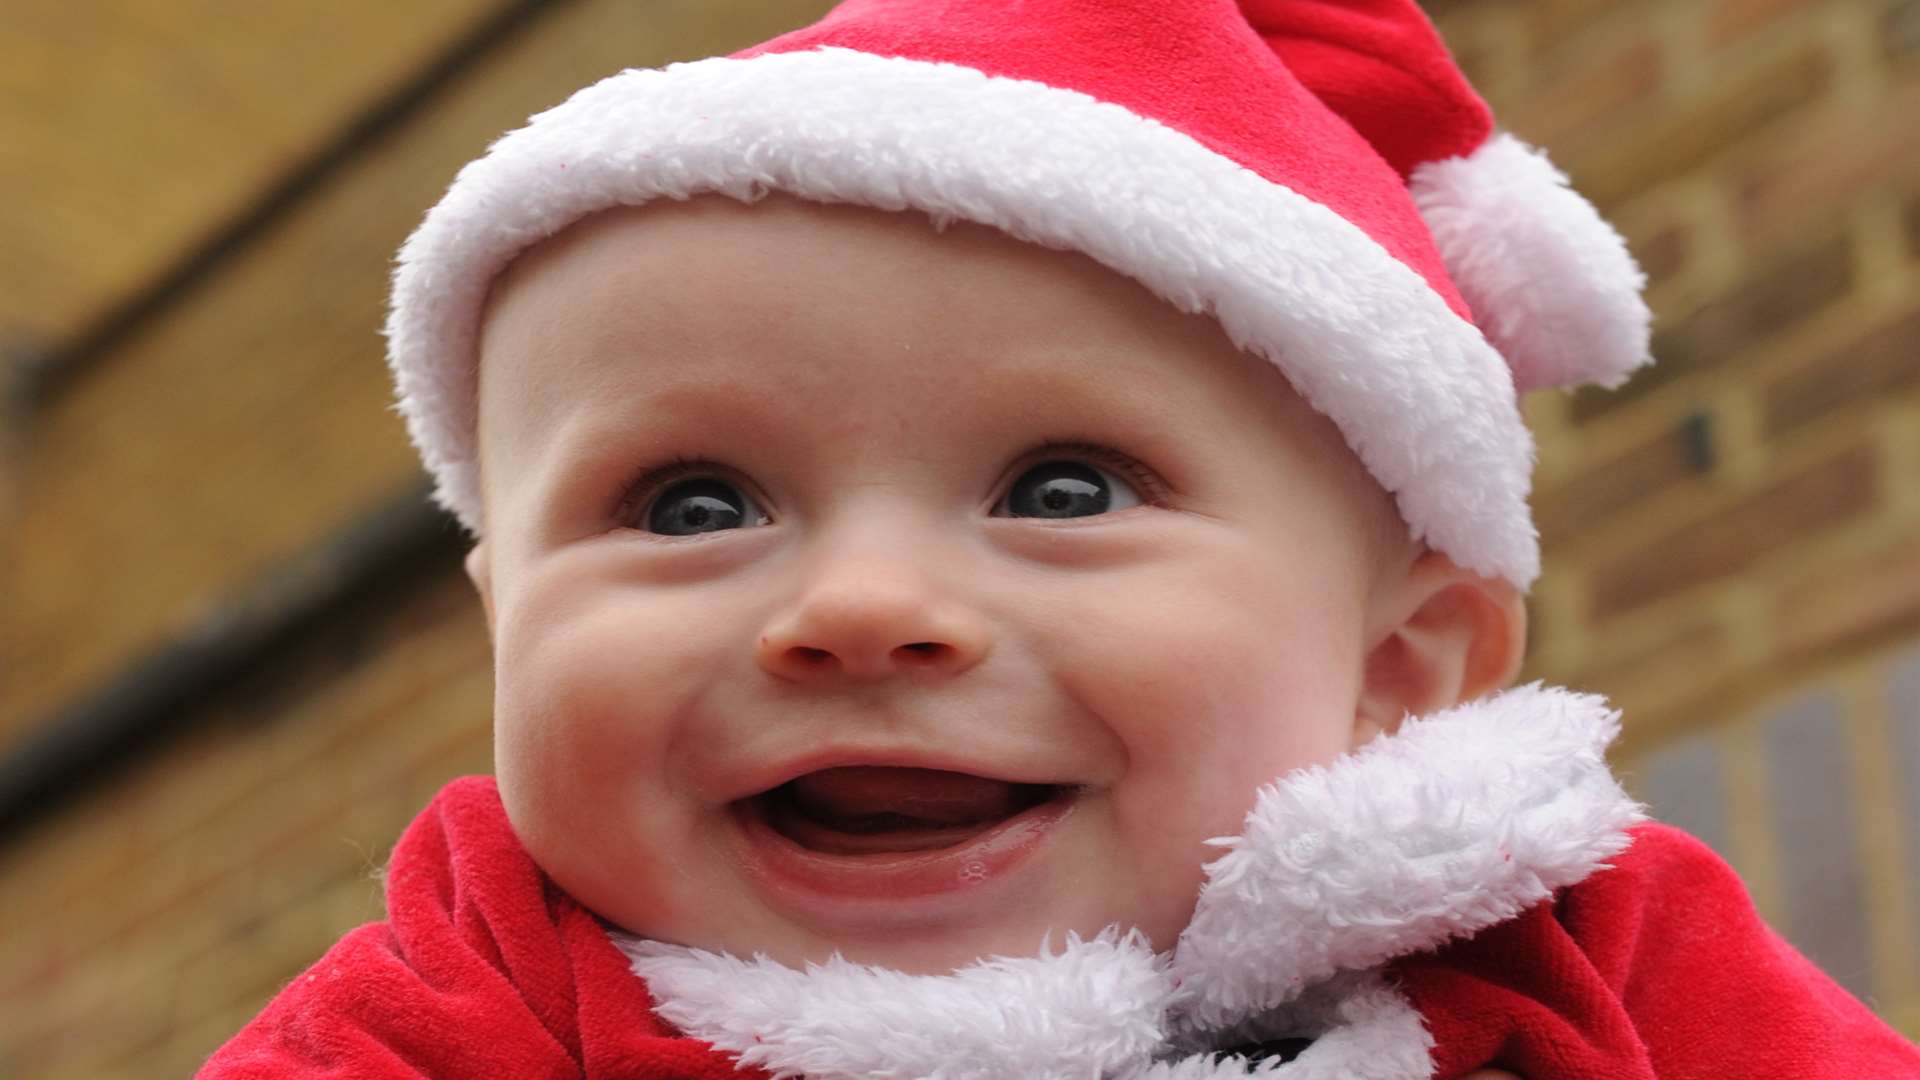 Four-month-old Oscar Donald